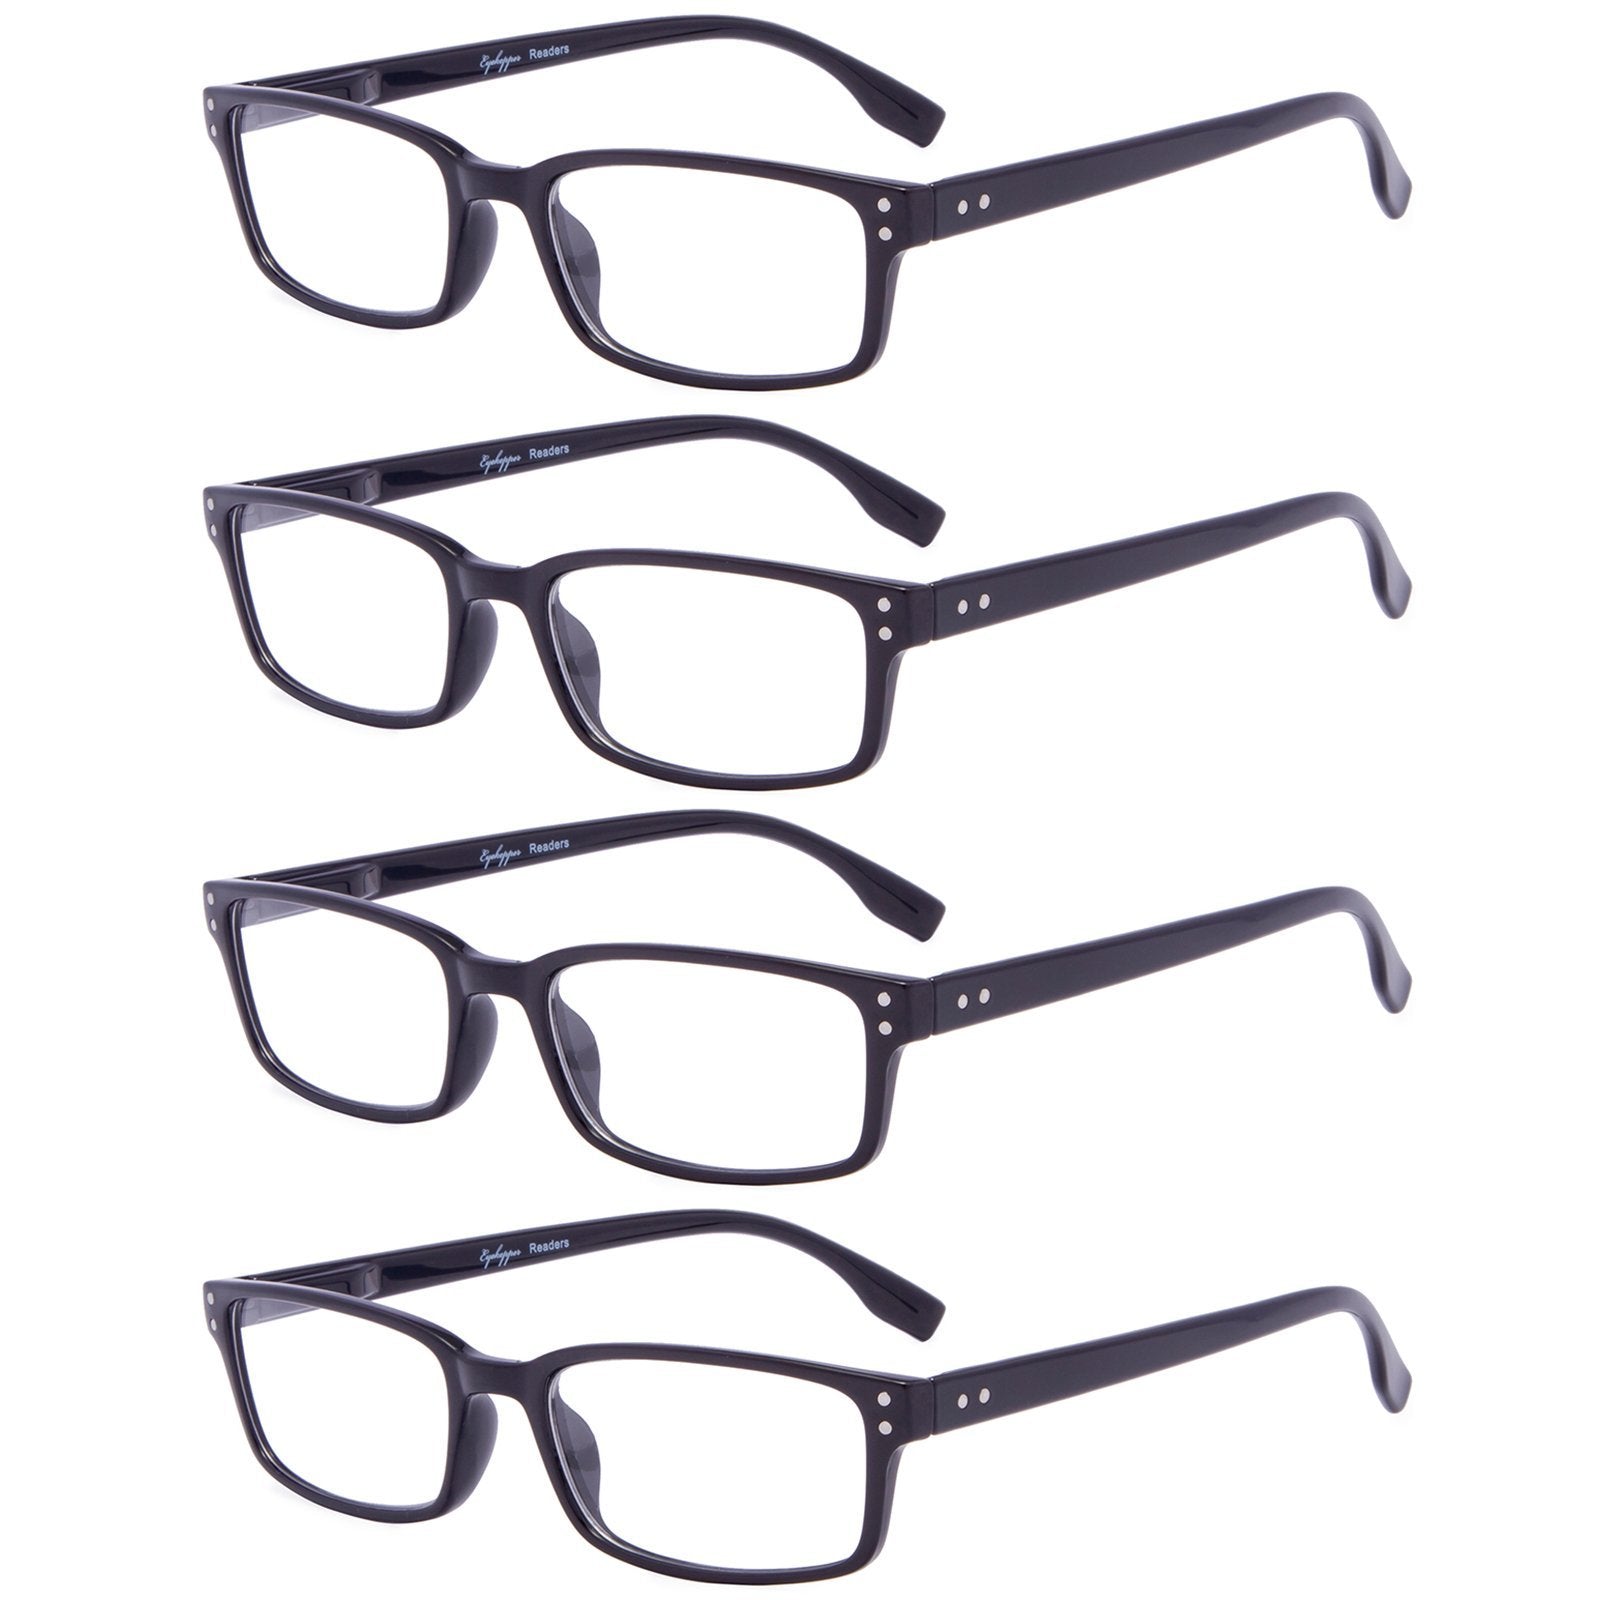 Reading Glasses Comfort Readers For Women Men R097 A 4pack